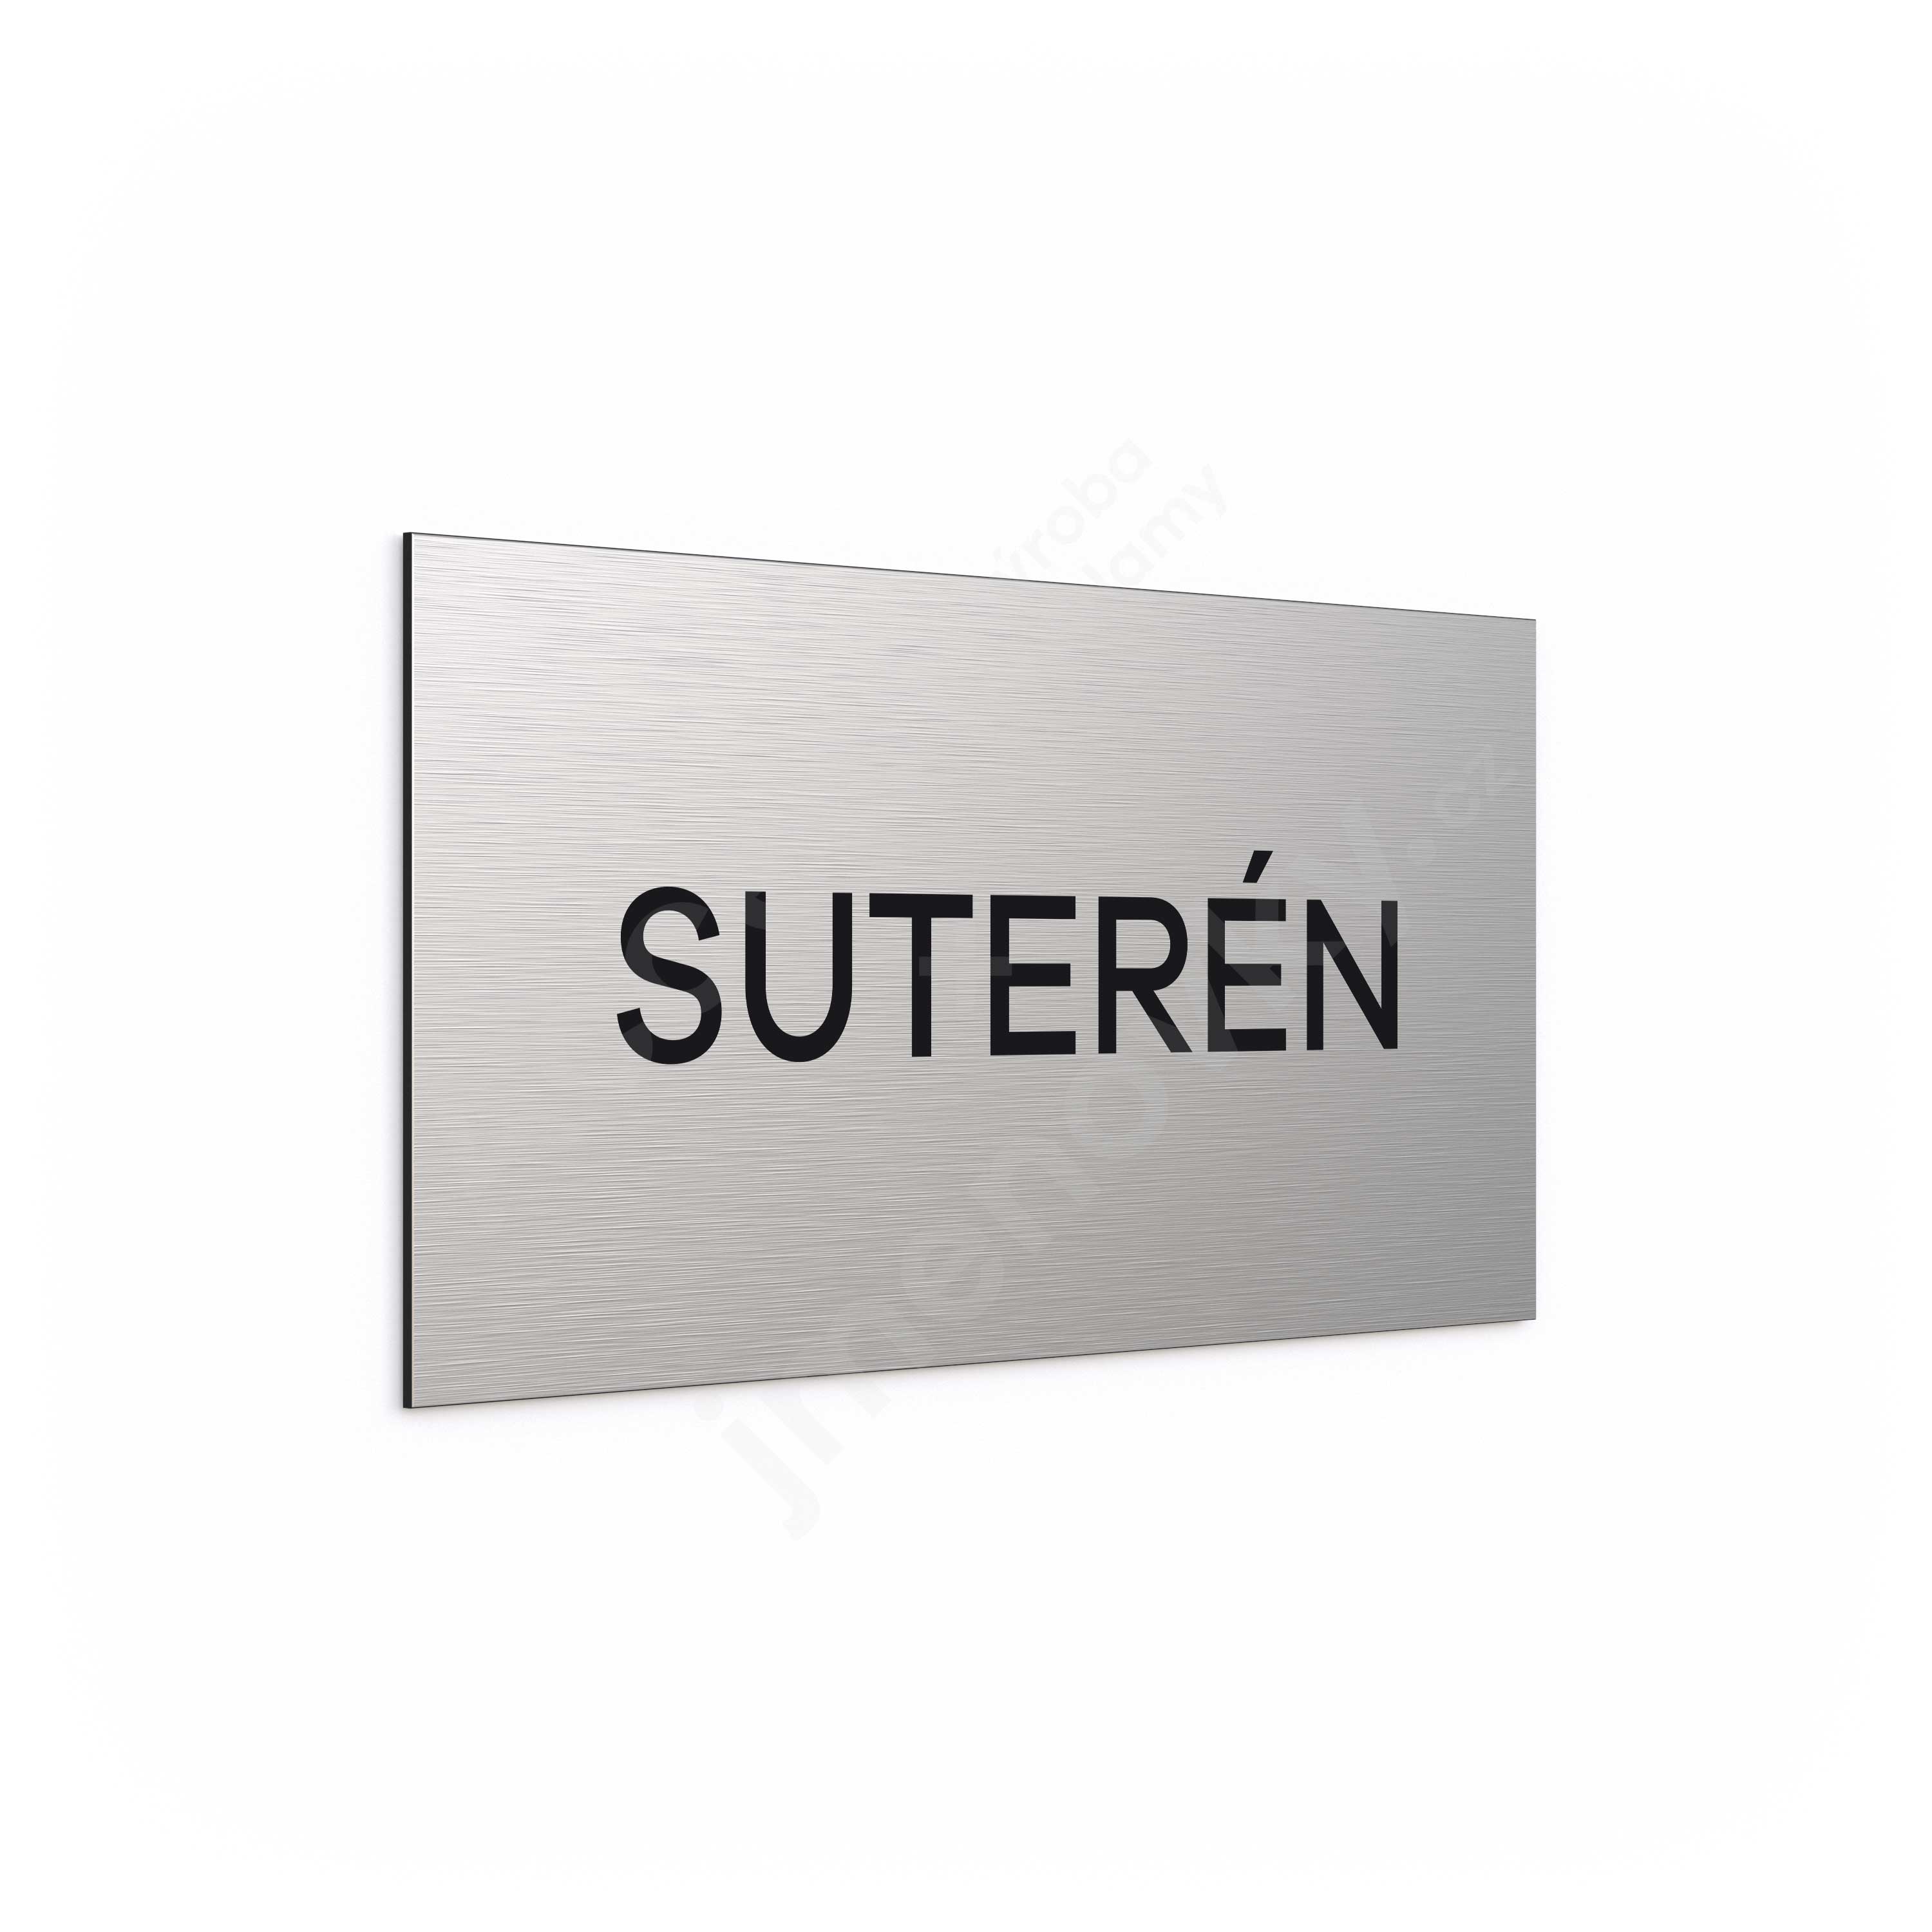 Oznaen podla "SUTERN" (300 x 150 mm)